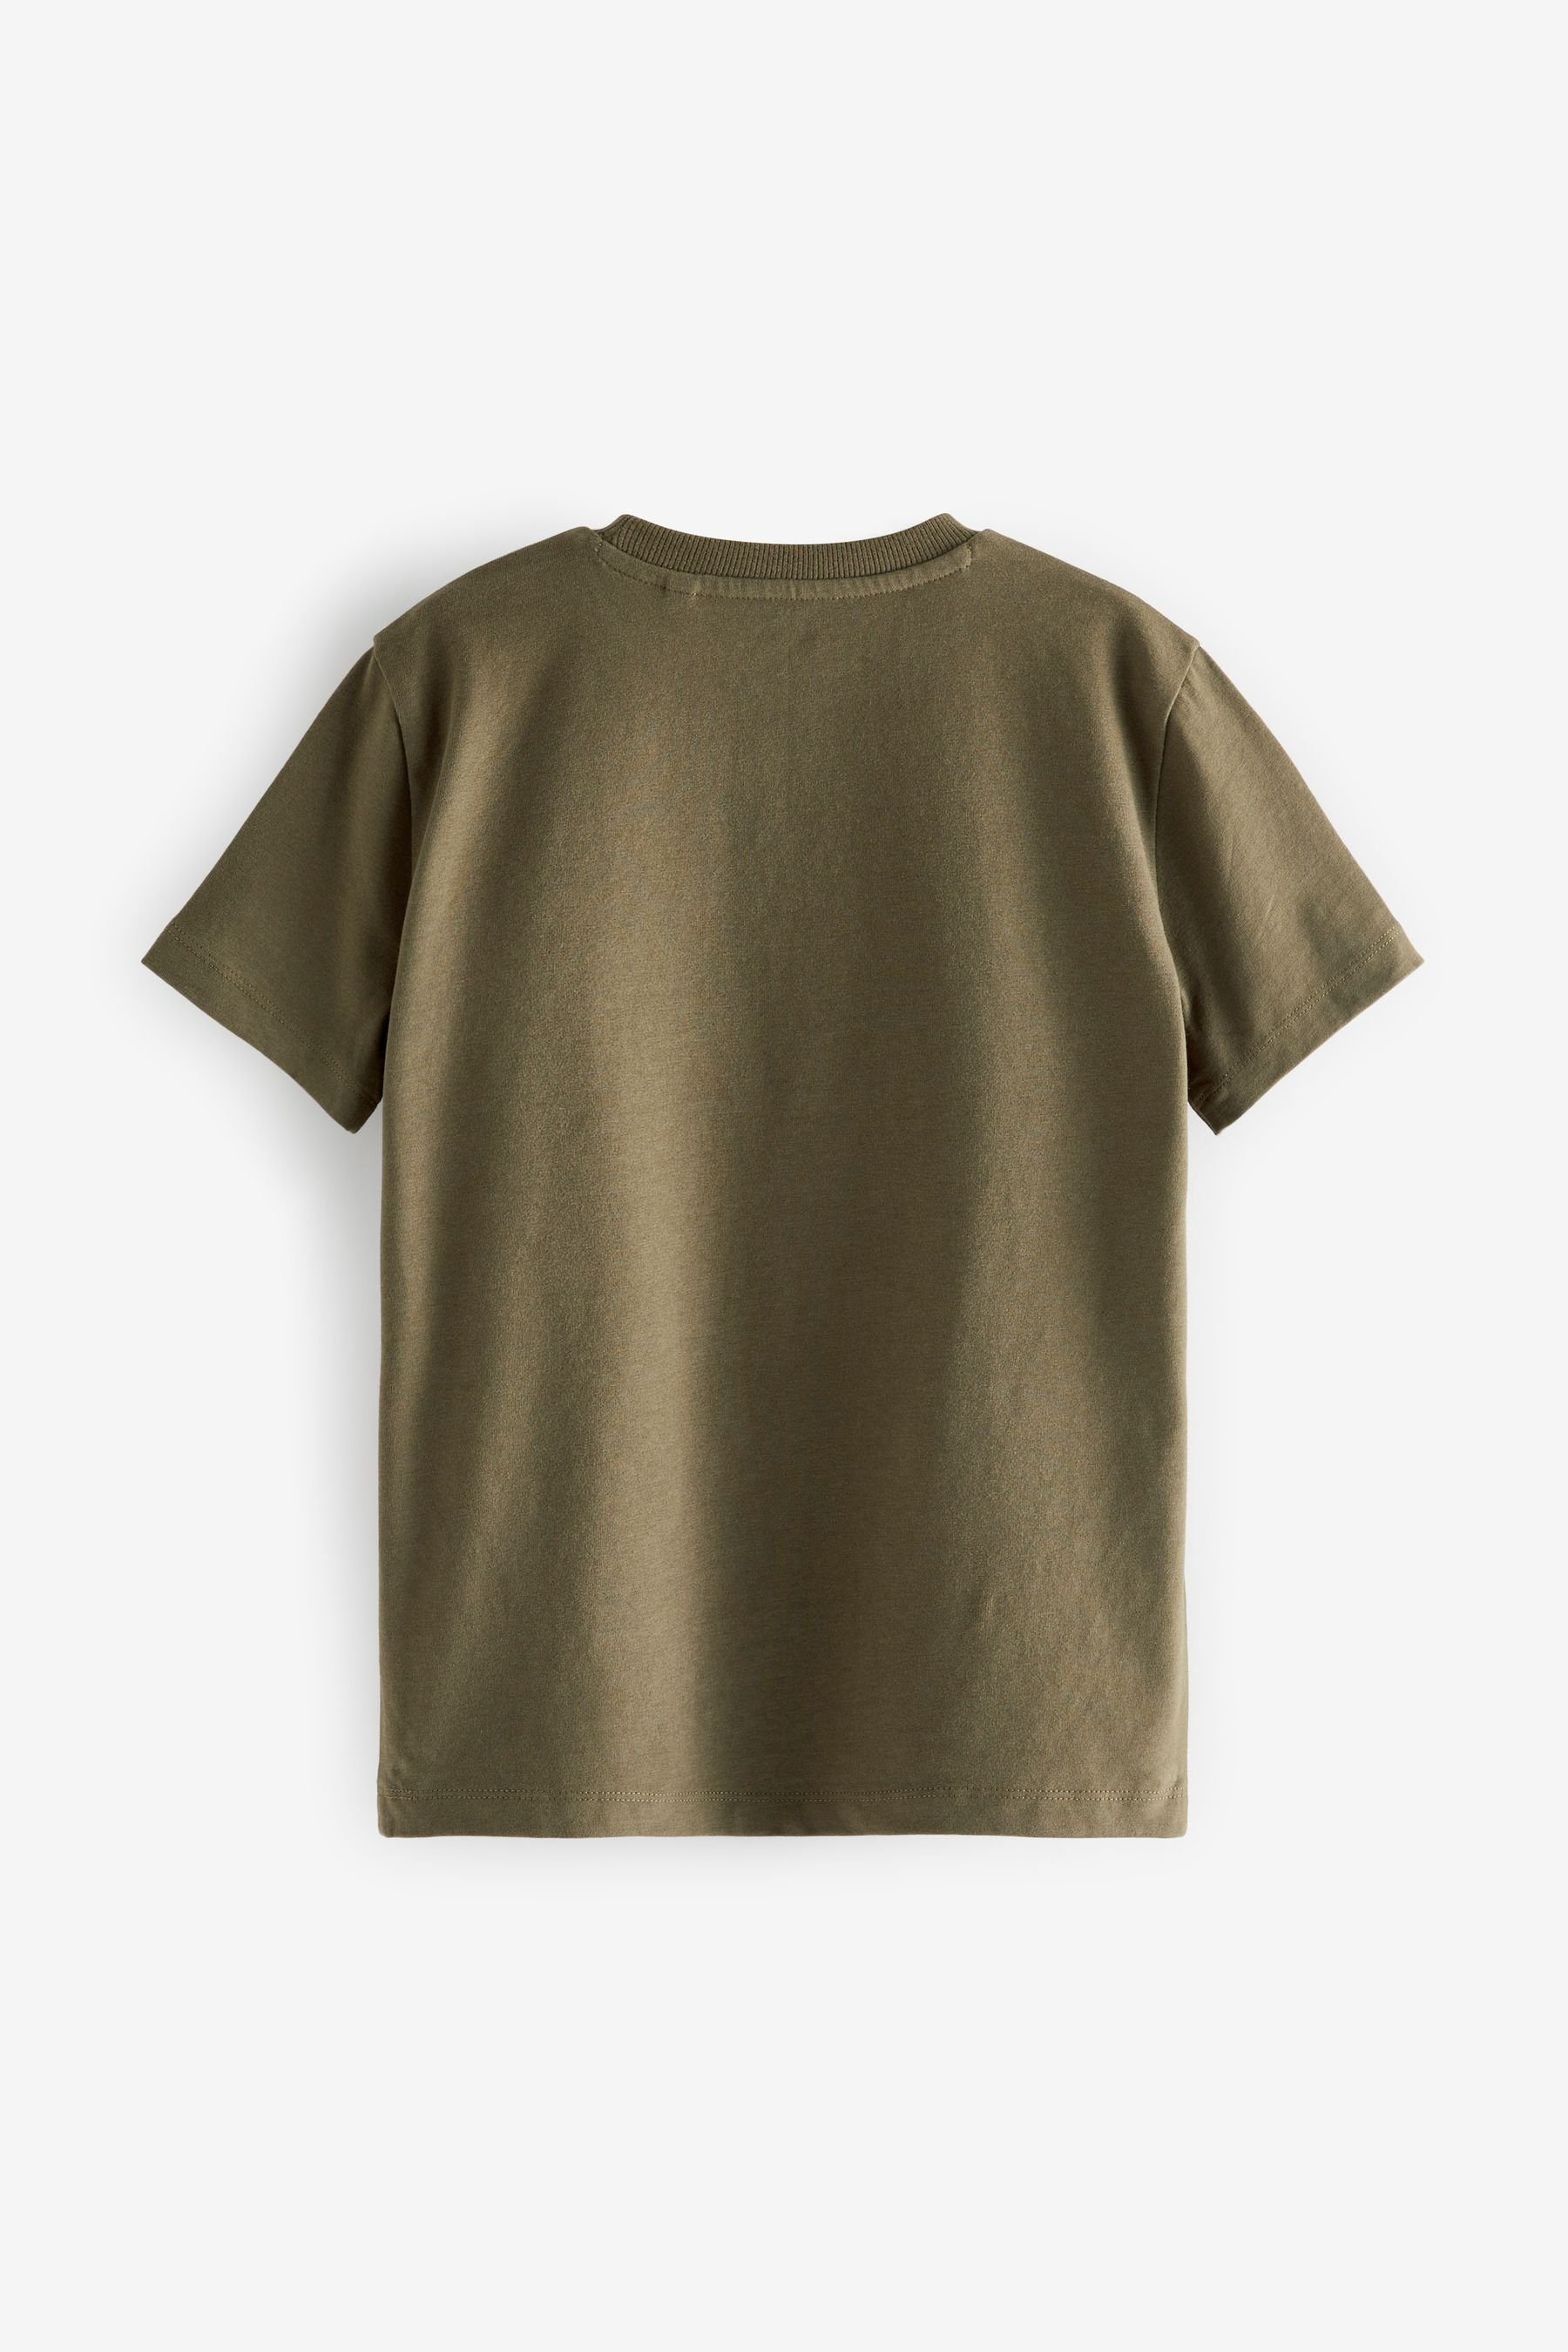 Kurzarm-T-Shirts (4-tlg) Green/Tan Brown Next mit T-Shirt 4er-Pack Hirsch-Stickerei Grey/Black/Khaki